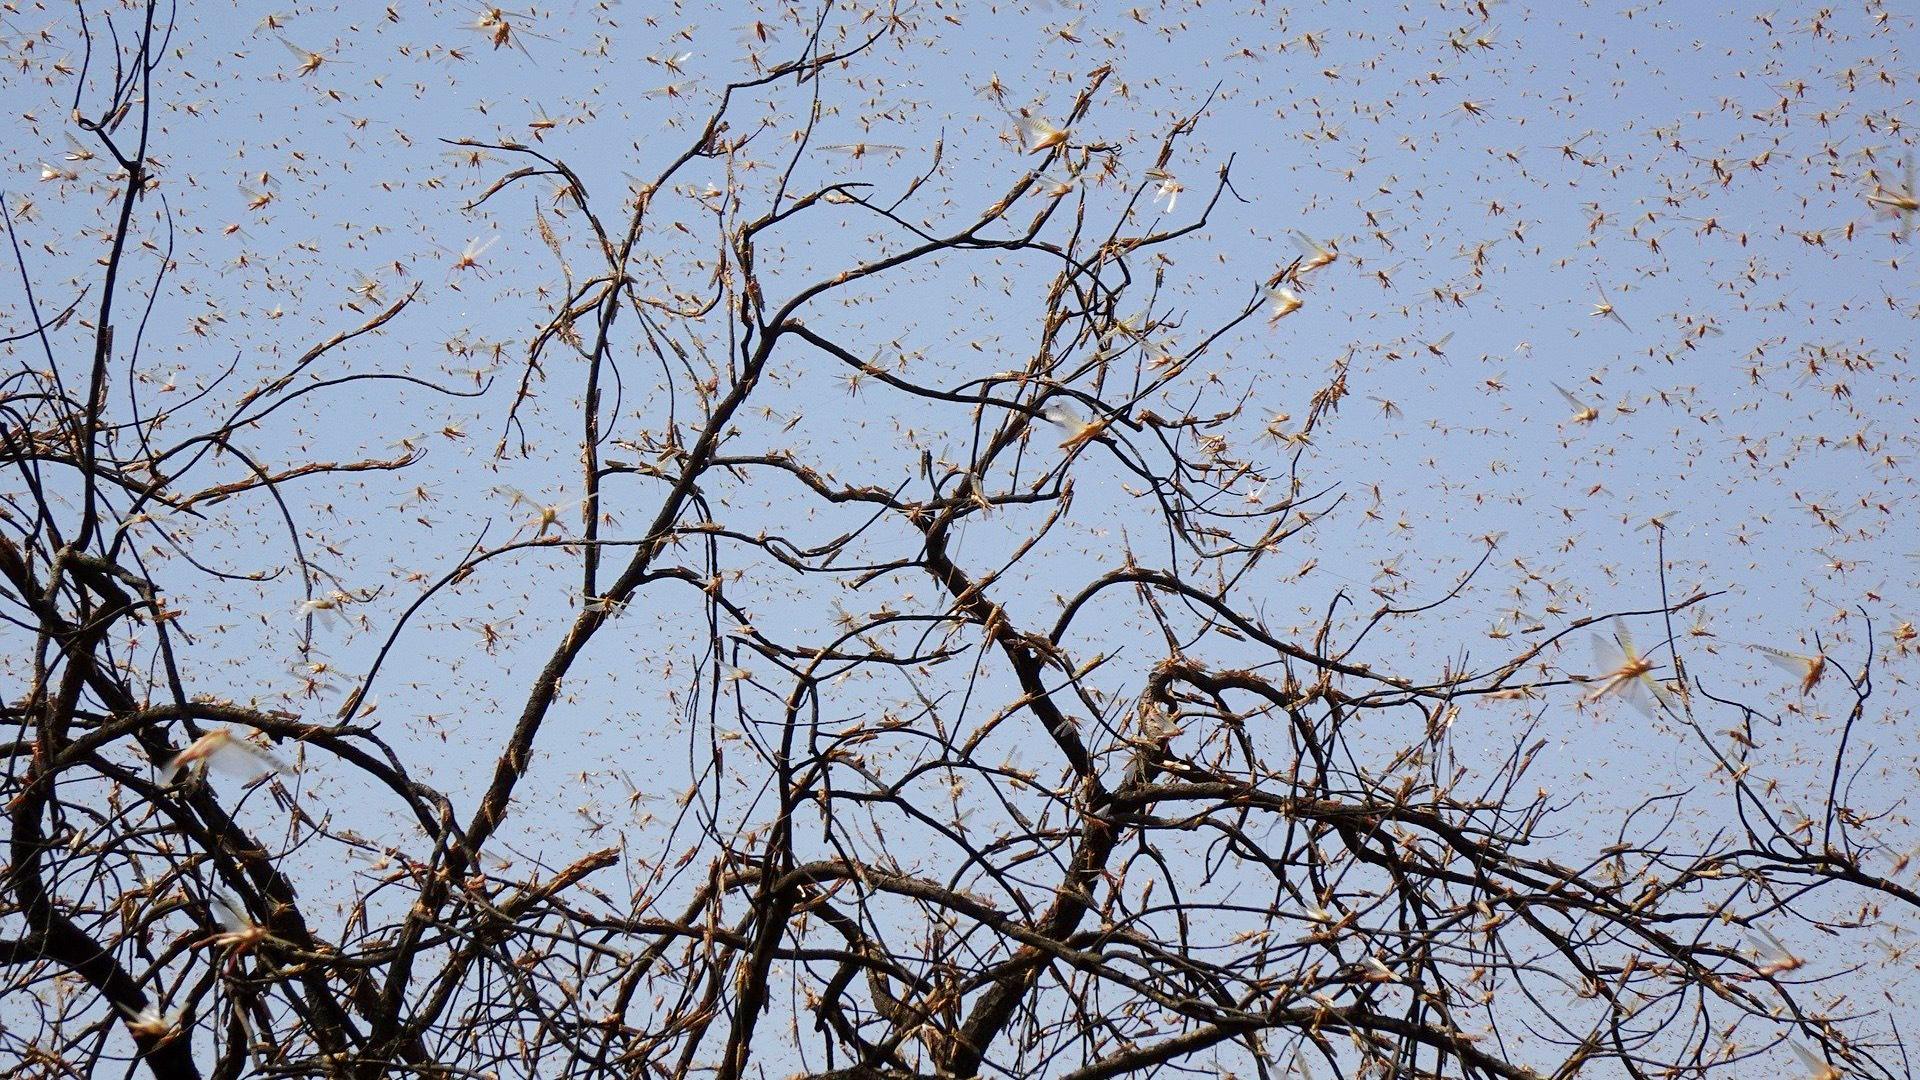 Locust swarm. (Sarangib / Pixabay)